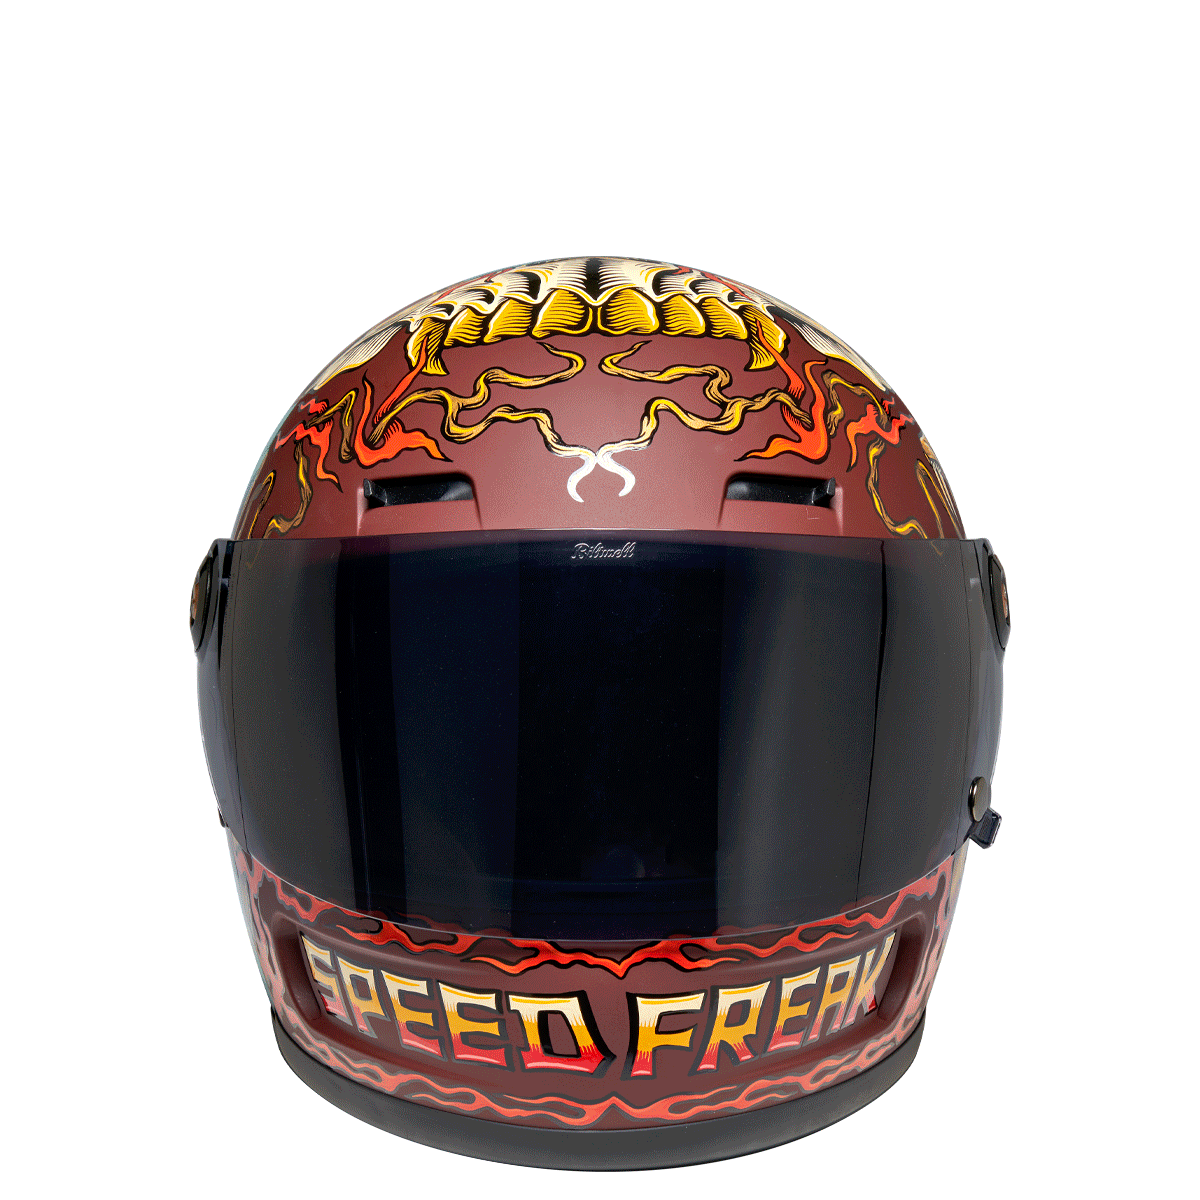 Custom Painted Gringo SV Helmet by Jake "Creep" Crawley